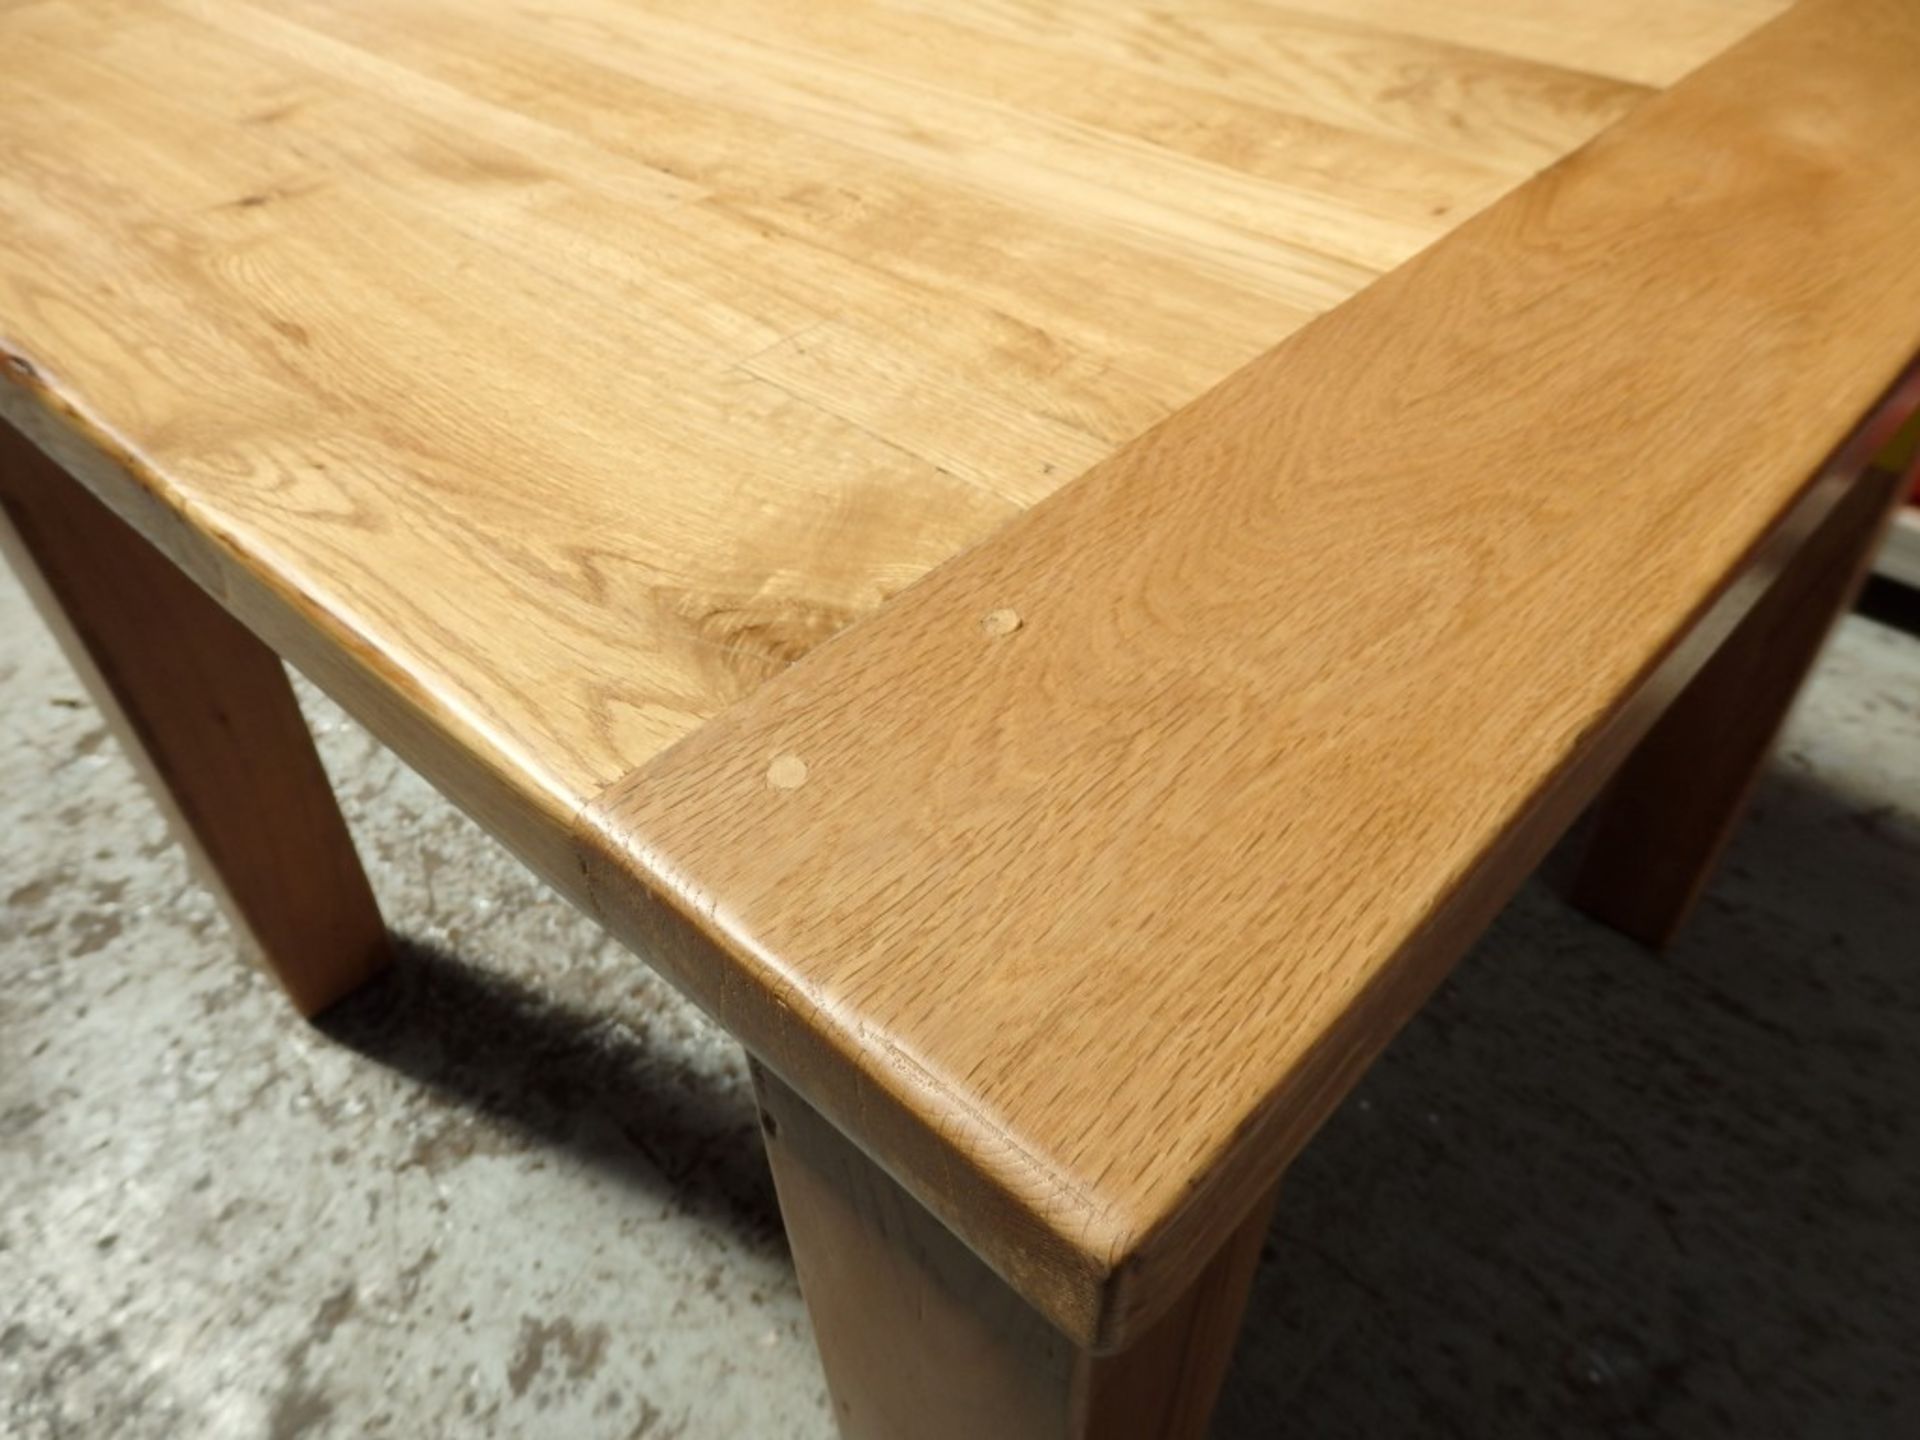 1 x Mark Webster Reclaimed Oak Table - Dimensions: W100 x H80 x D100cm - Prebuilt, Ex-display - Ref: - Image 20 of 20